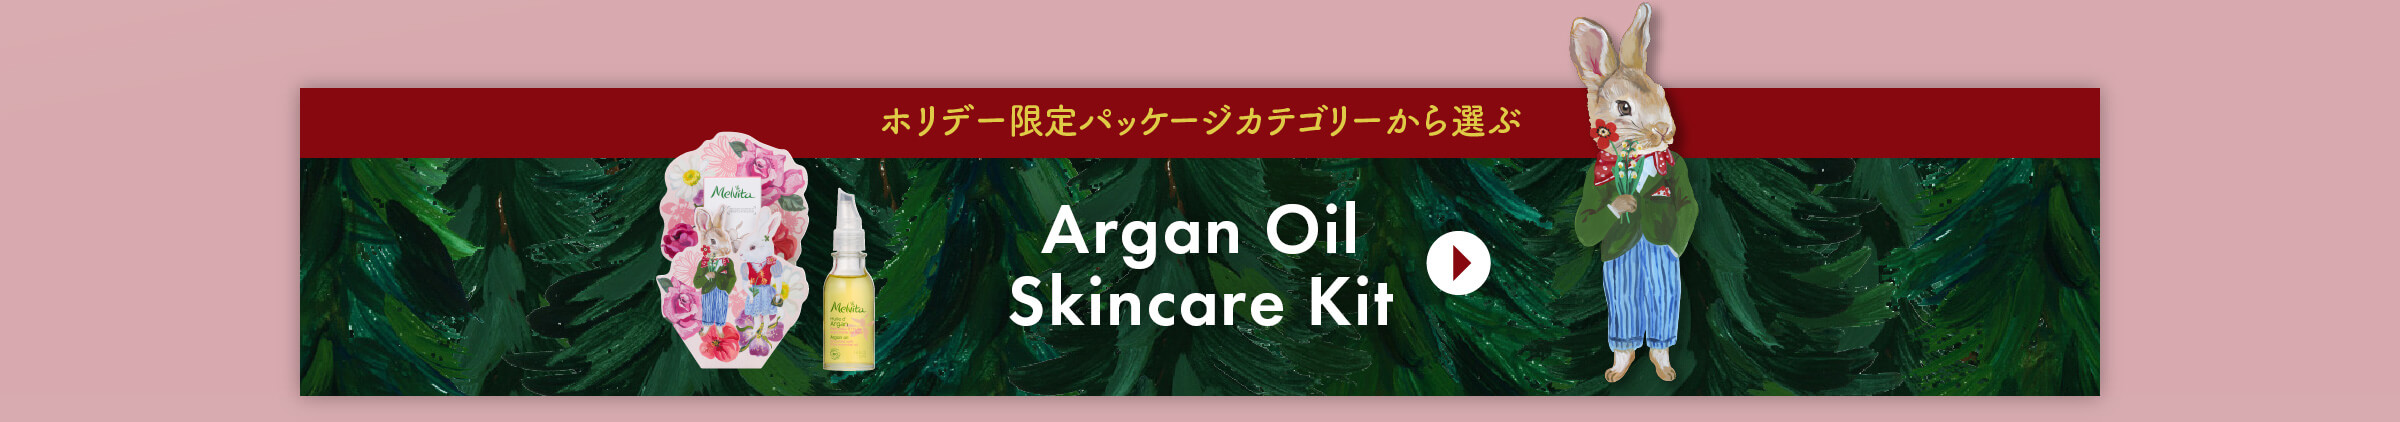 Argan Oil Skincare Kit